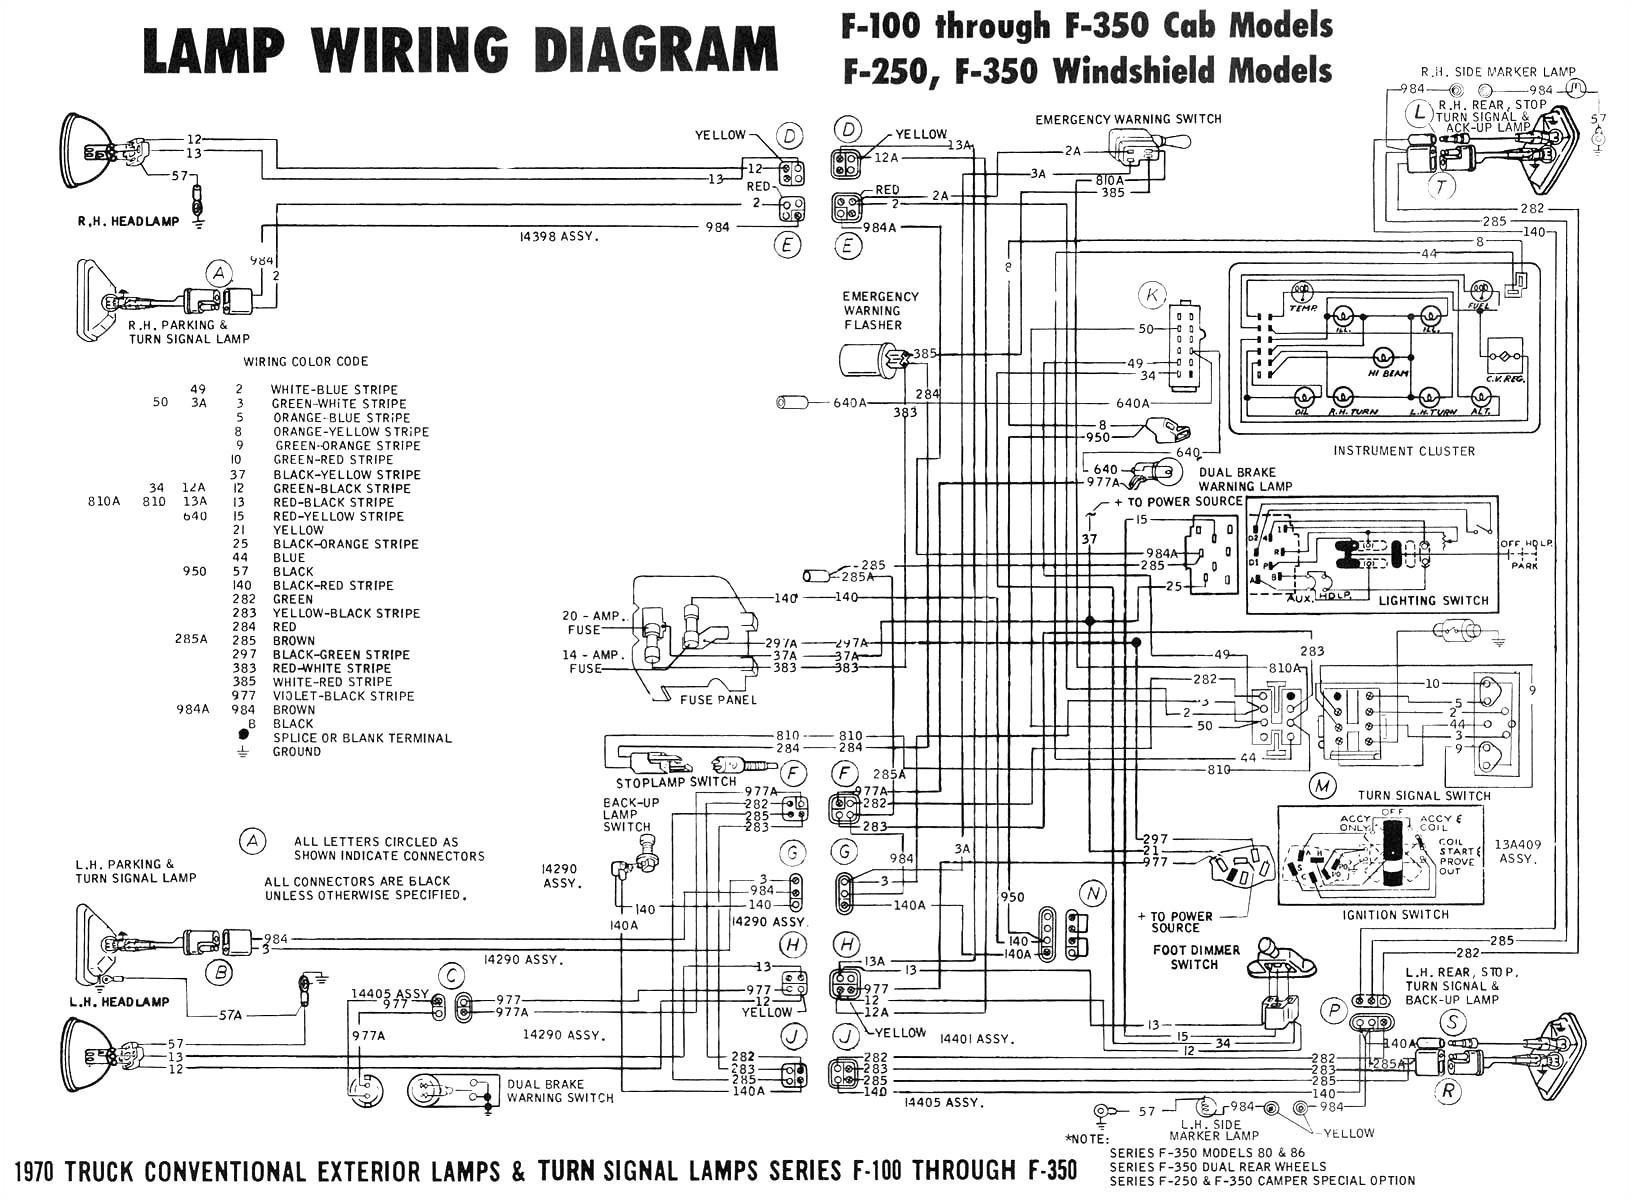 1989 chevy pickup engine diagrams autos weblog schema diagram database 1994 chev pick up fuse diagram